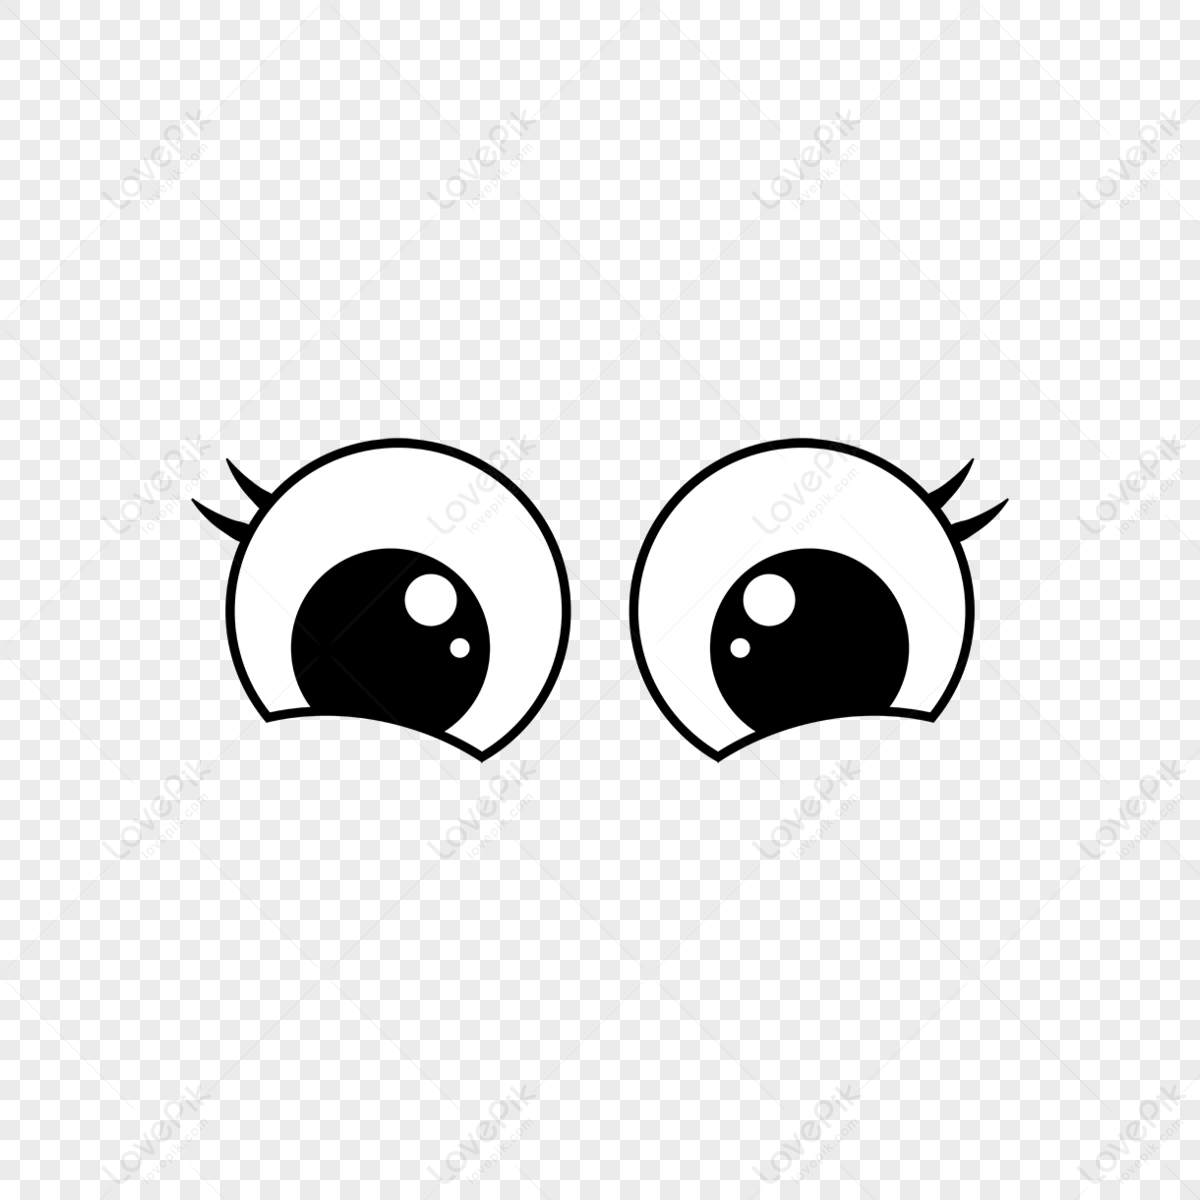 Cartoon cute round eyes material eyes clipart anime eyes,cartoon animal,eyeball png transparent background